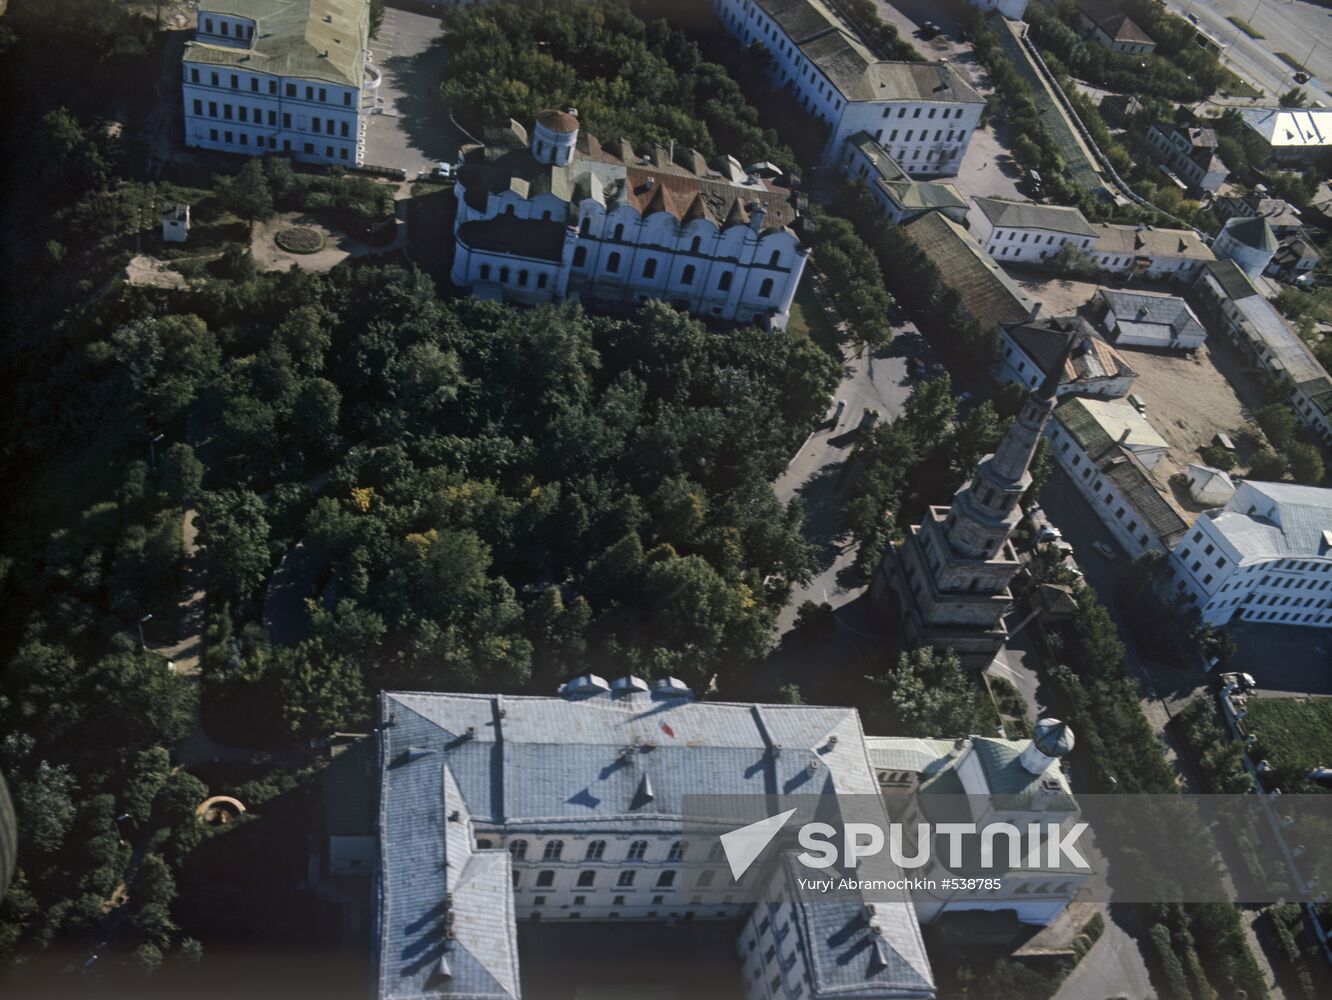 Kazan Kremlin